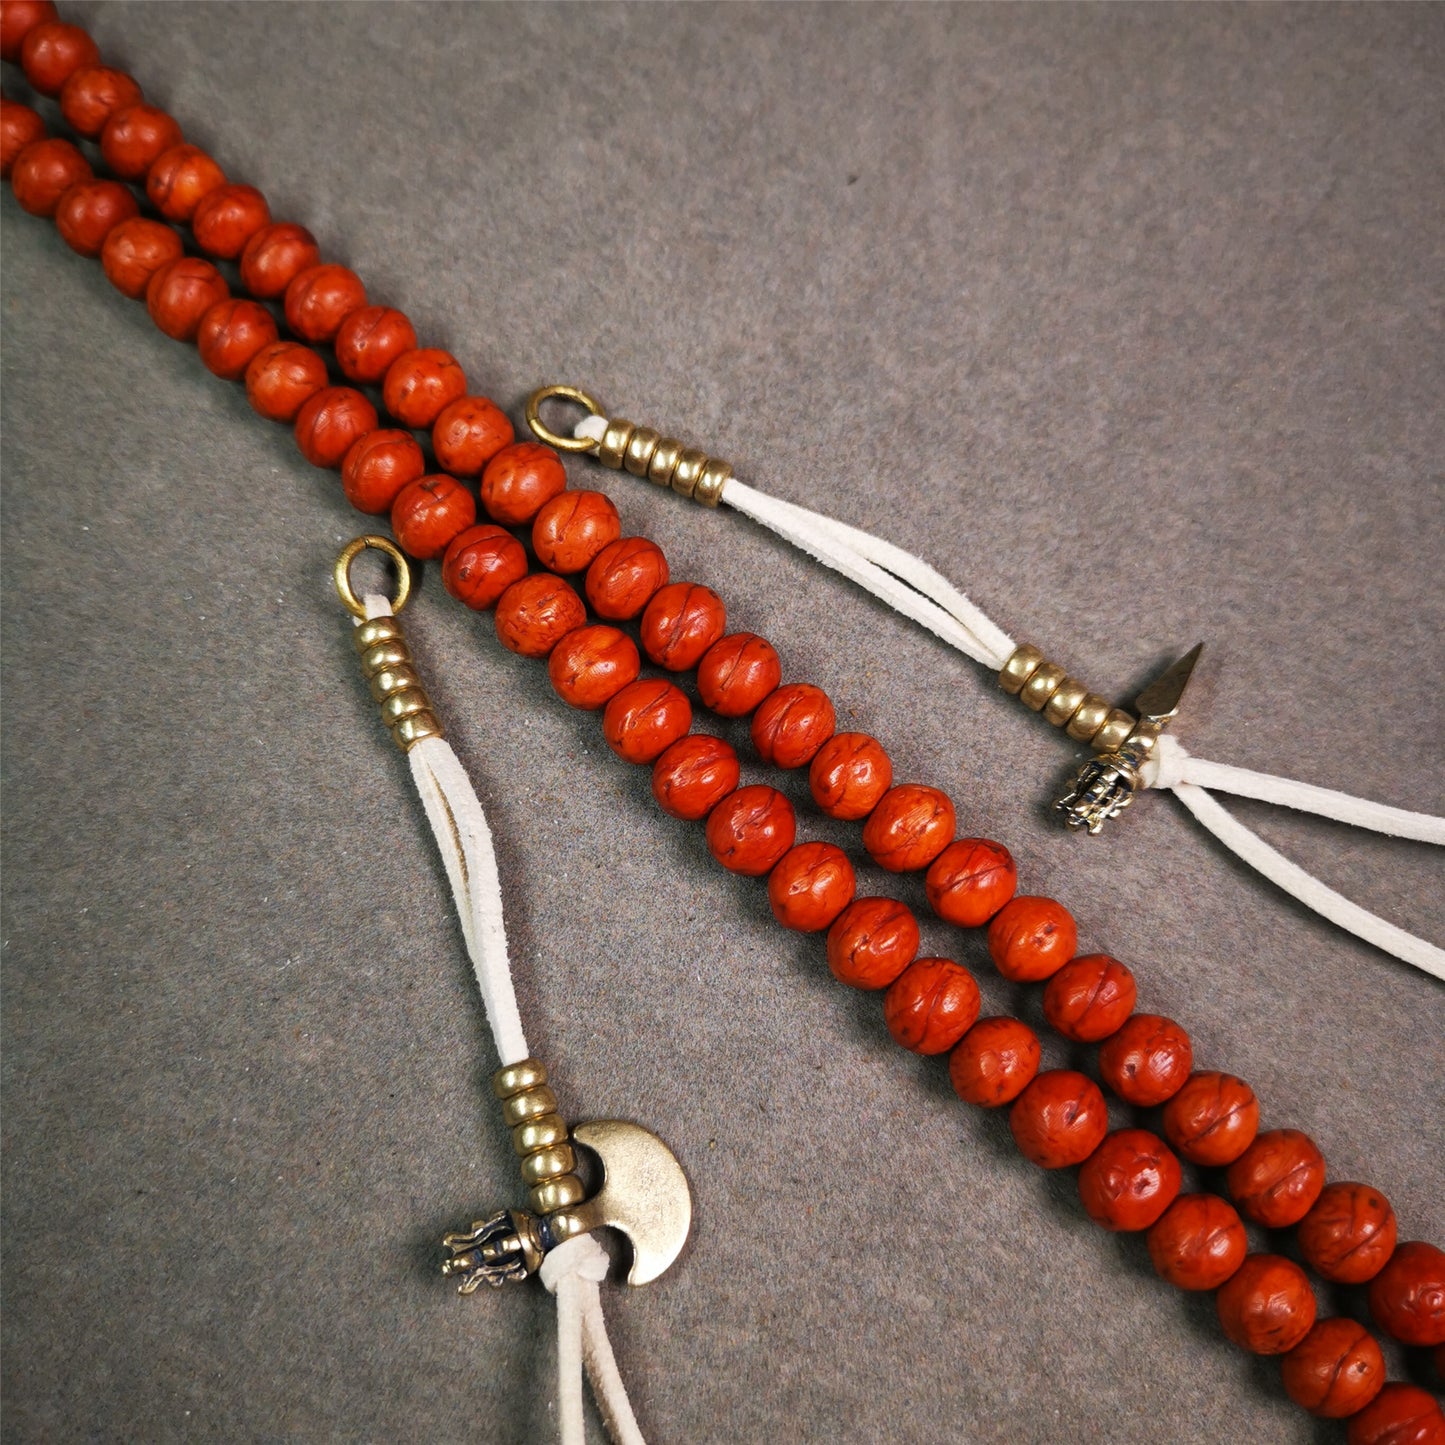 5mm Brass Prayer Bead Counters with Kartika and Kila Pendant